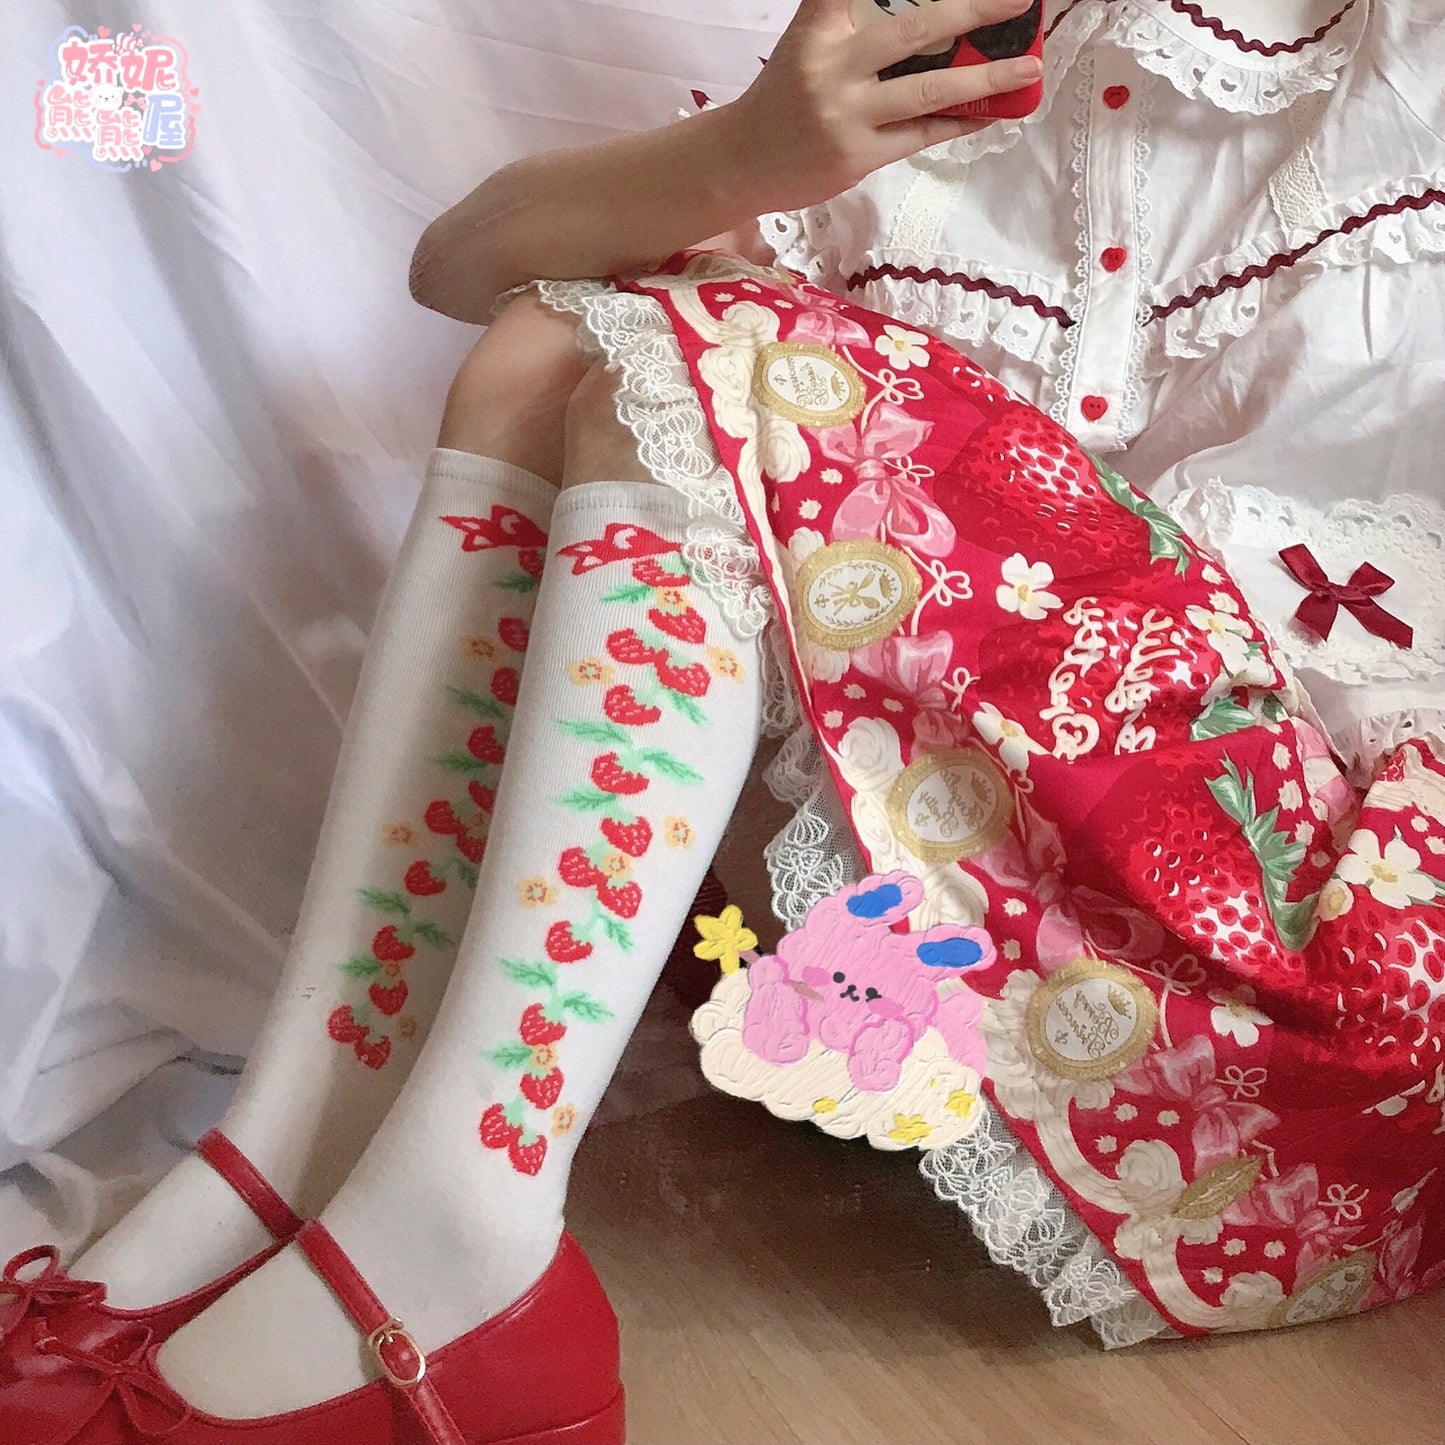 Sweet Strawberry Lolita Stockings